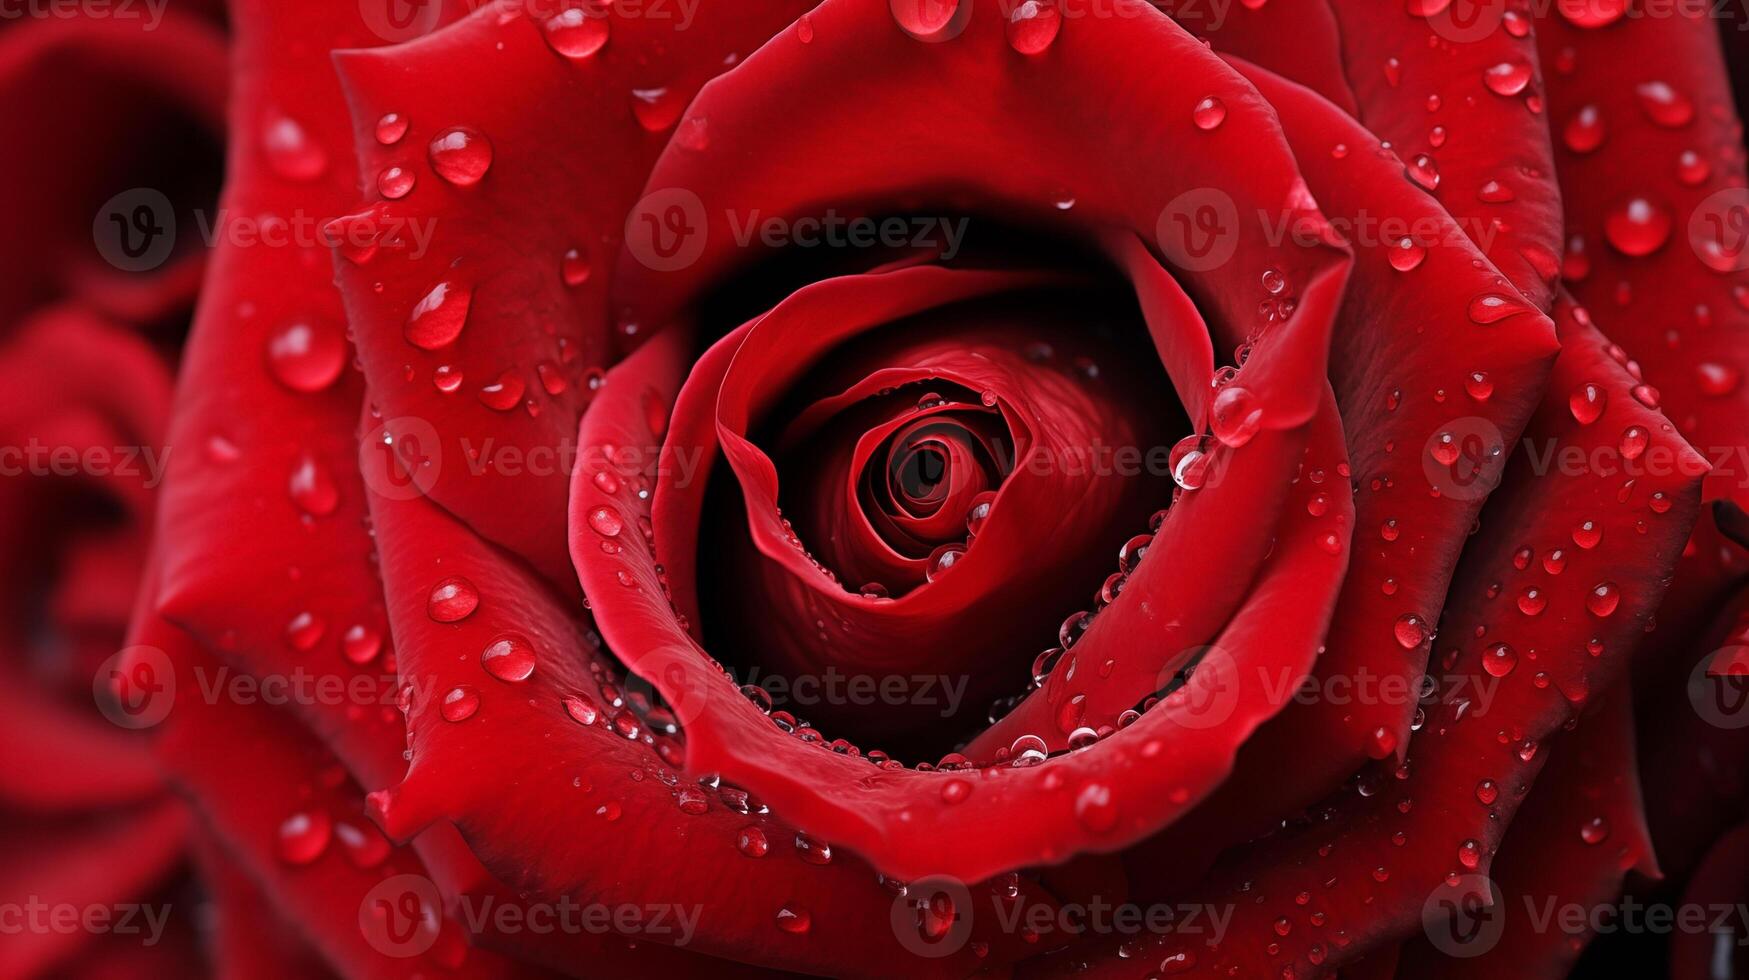 levendig rood roos met regendruppels tegen een contrasterend donker tint foto